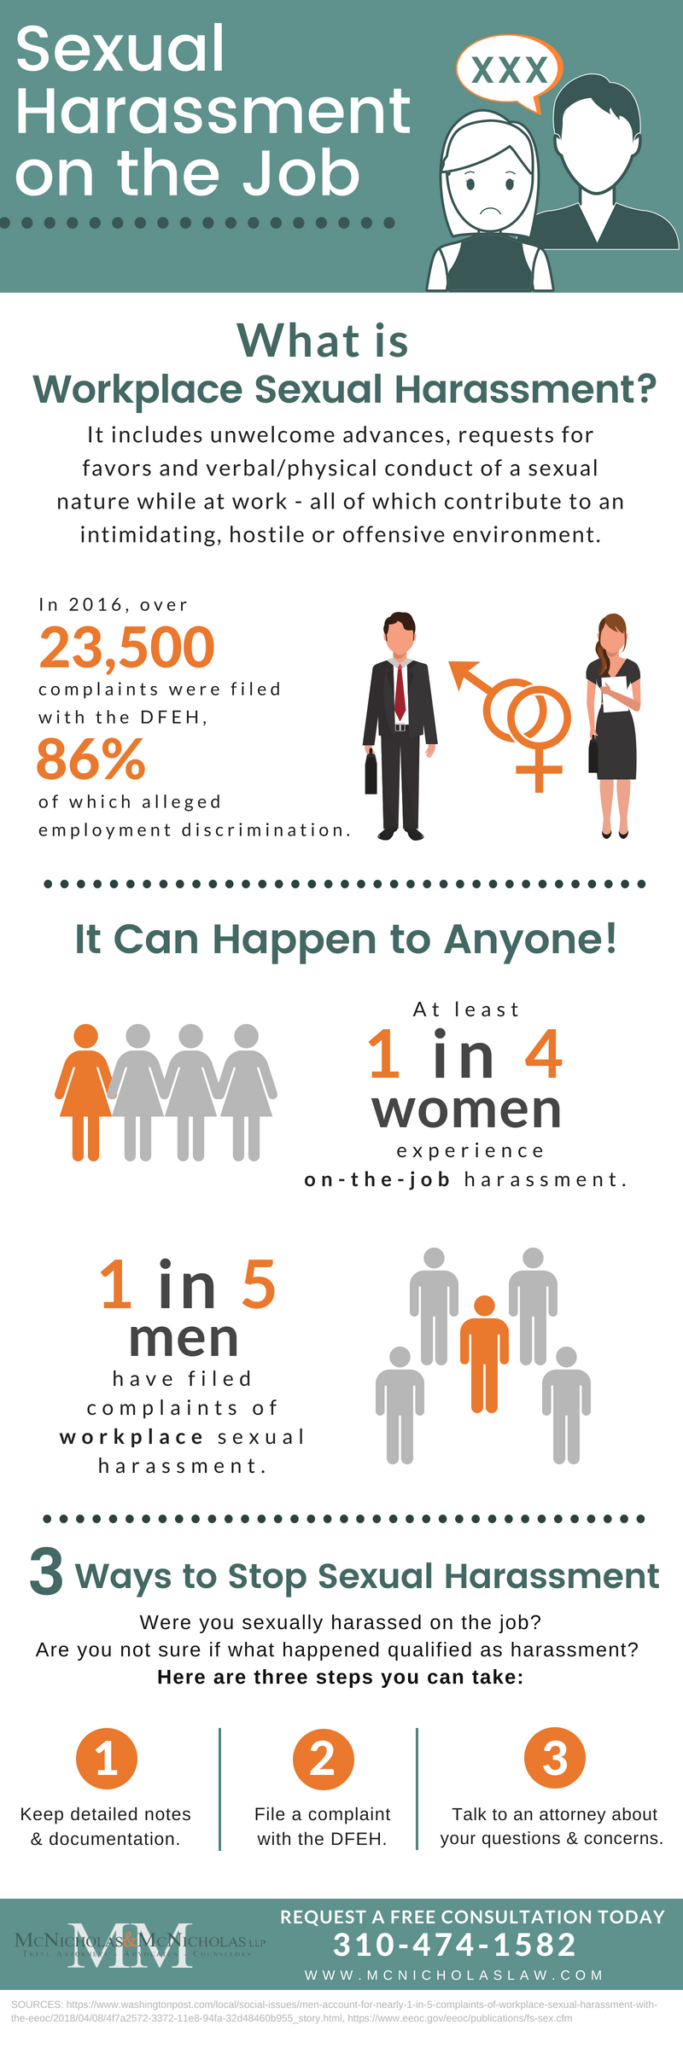 sexual-harassment-on-the-job-infographic-mcnicholas-mcnicholas-llp